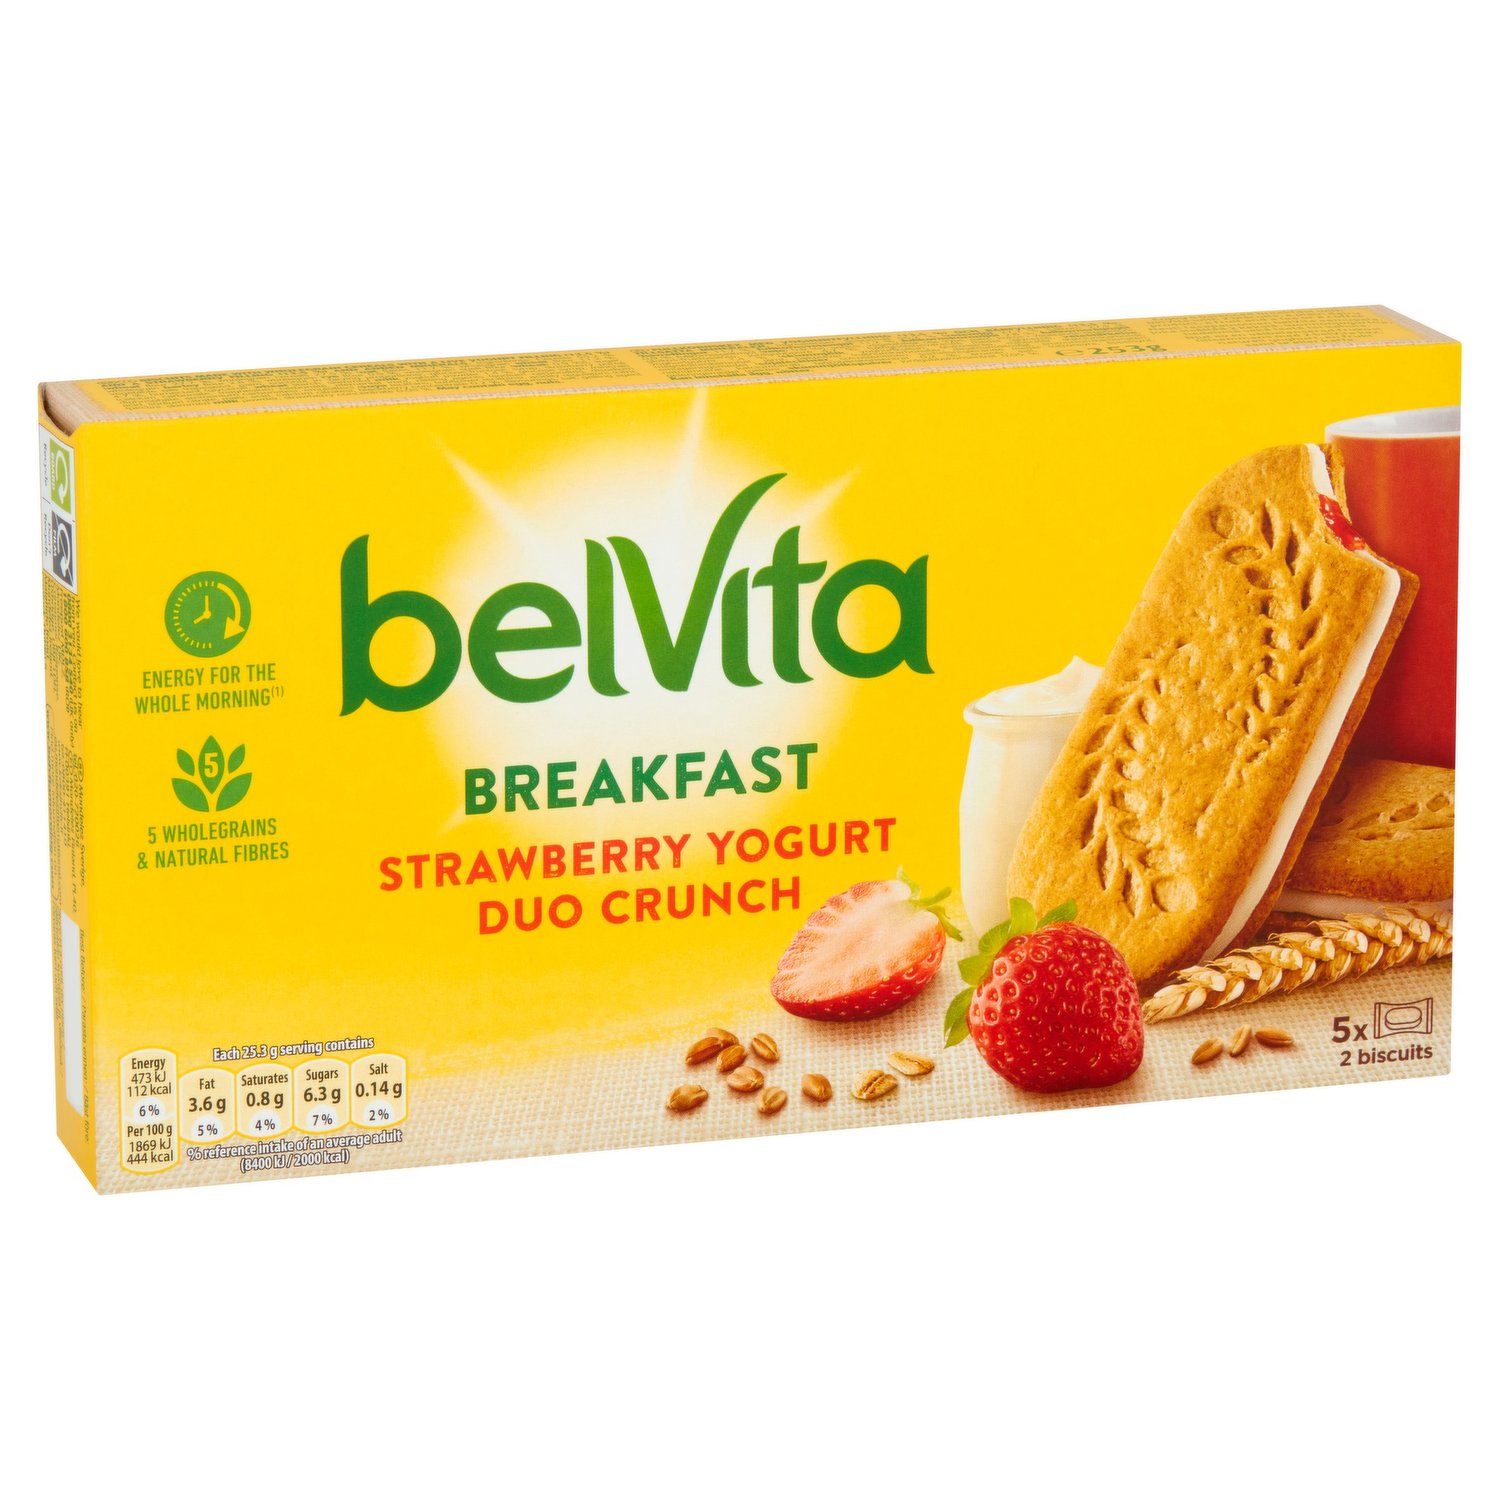 BelVita Breakfast Sandwich biscuits recalled after reports of allergic  reactions